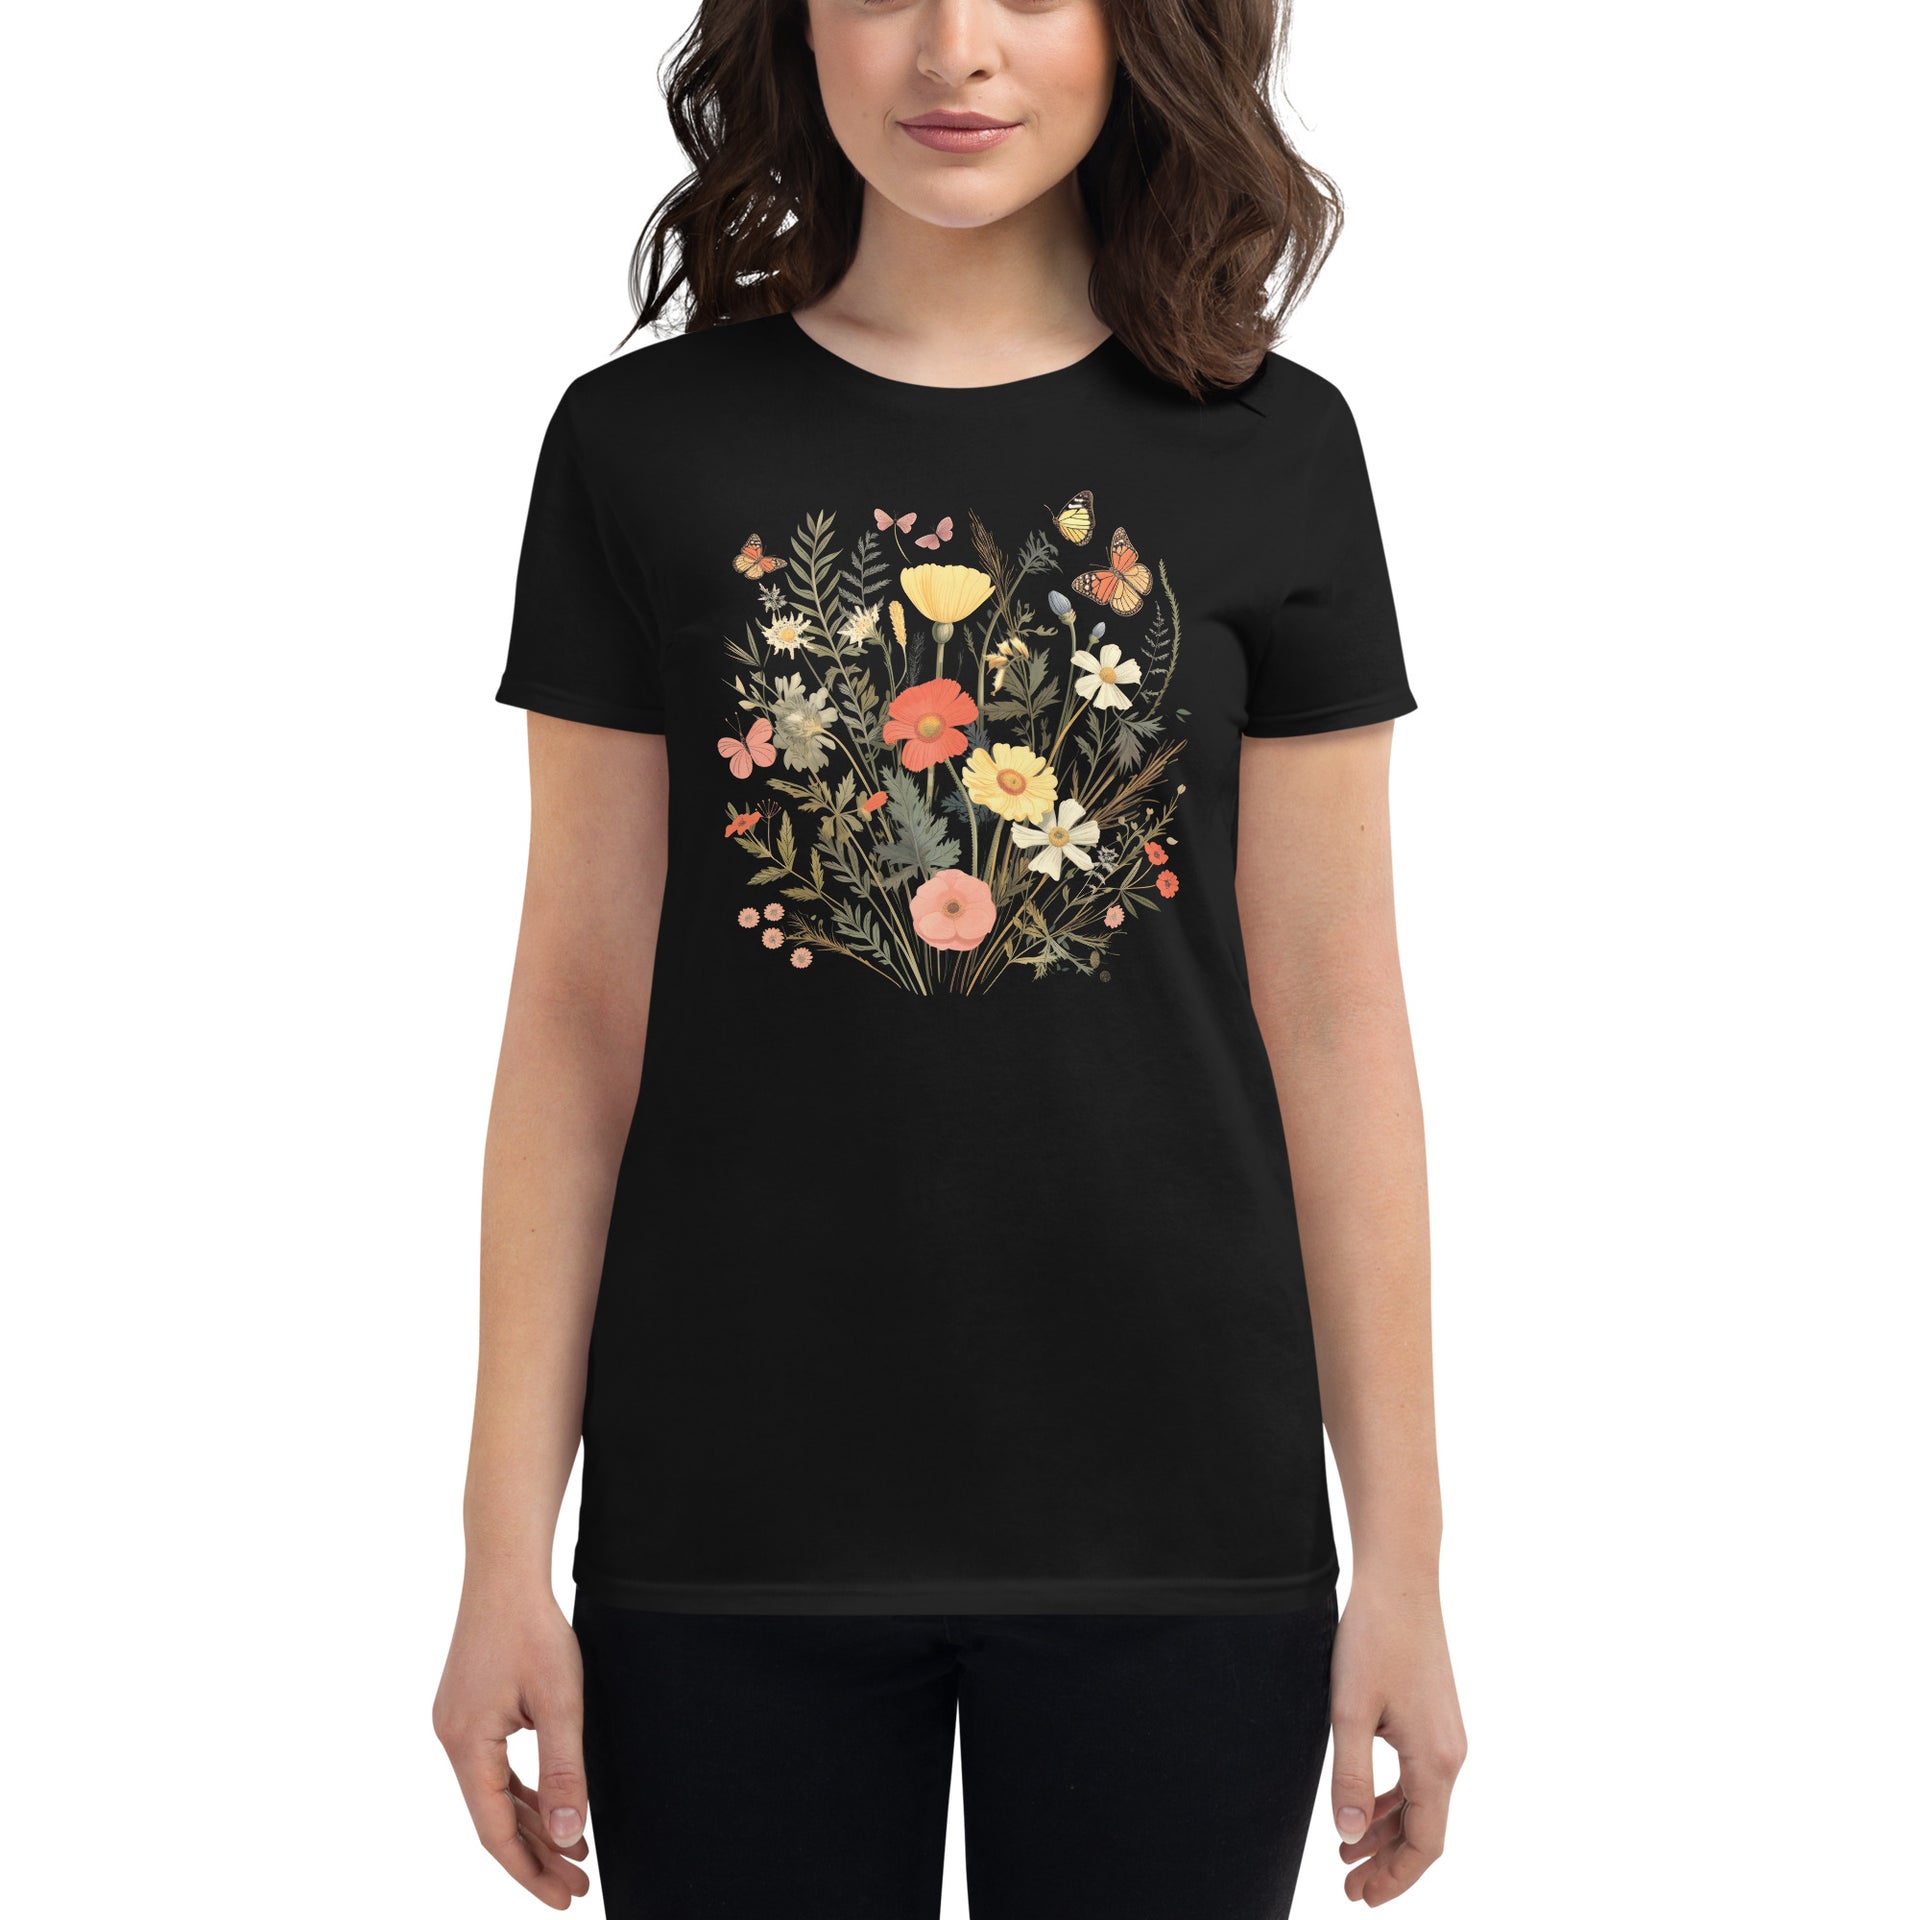 Vintage Wildflowers Women's T-Shirt